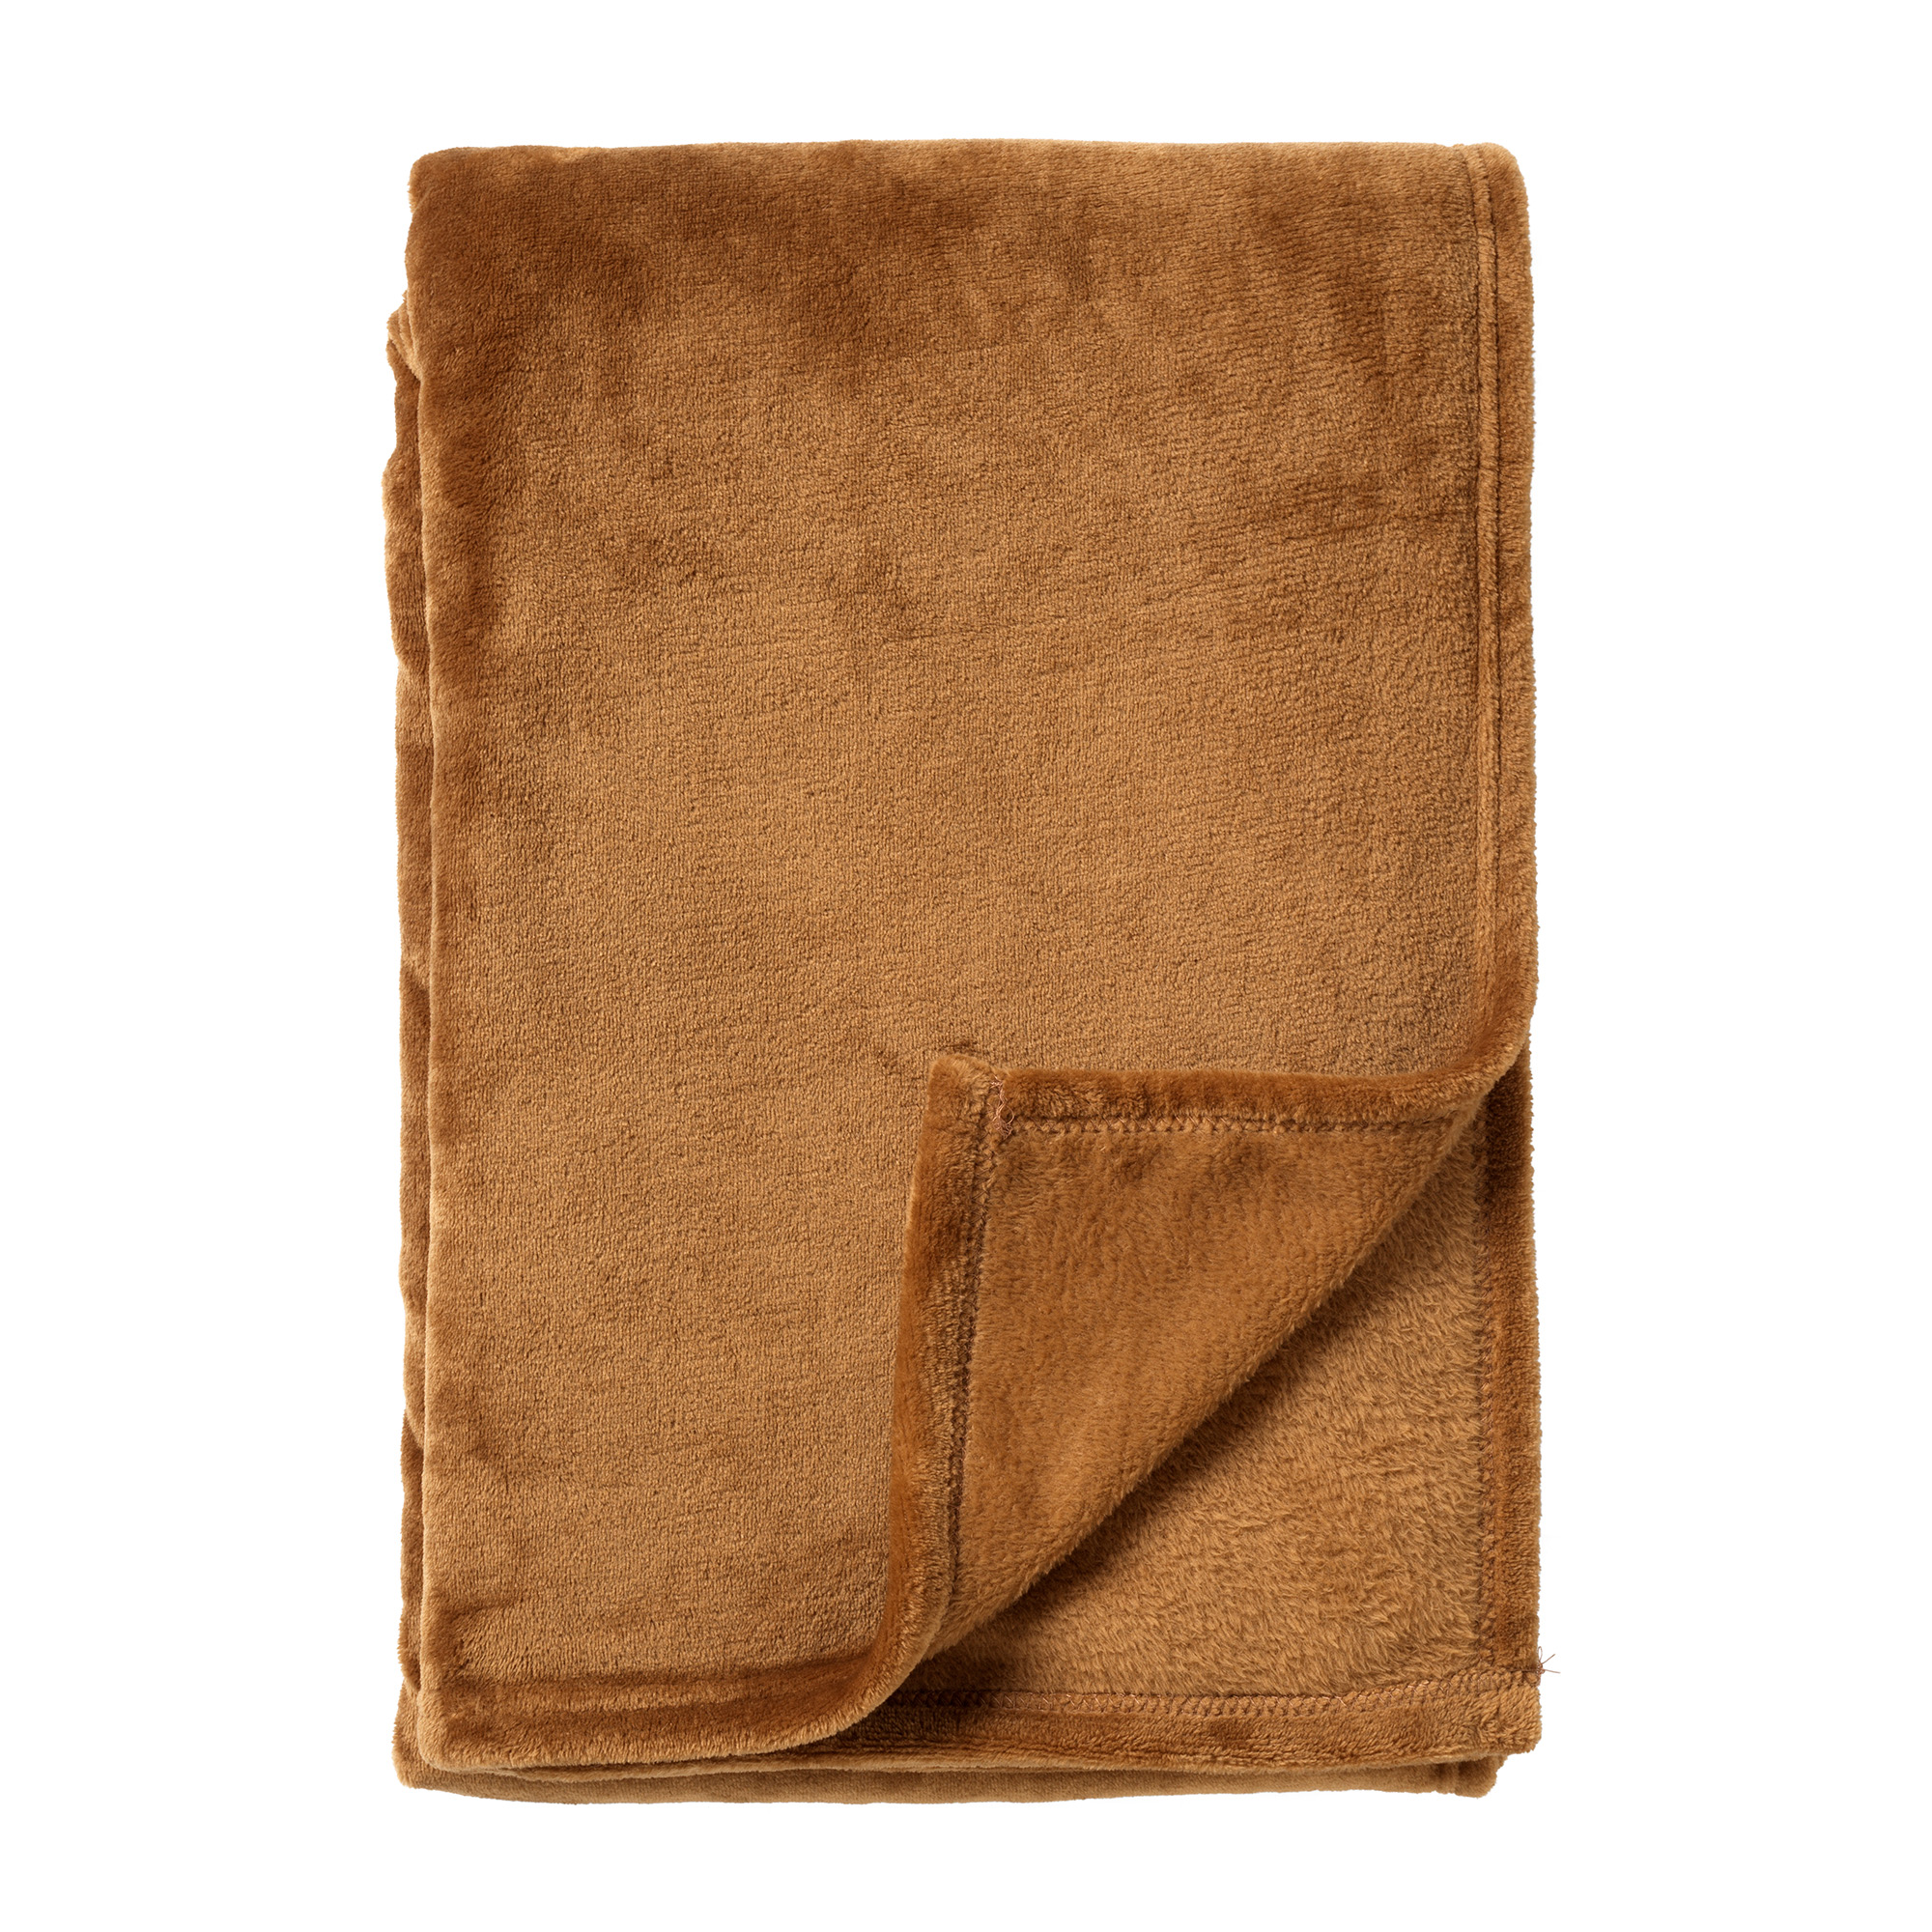 SIDNEY - Plaid Fleece deken van 100% gerecycled polyester – superzacht - 140x180 cm - Tobacco Brown- bruin